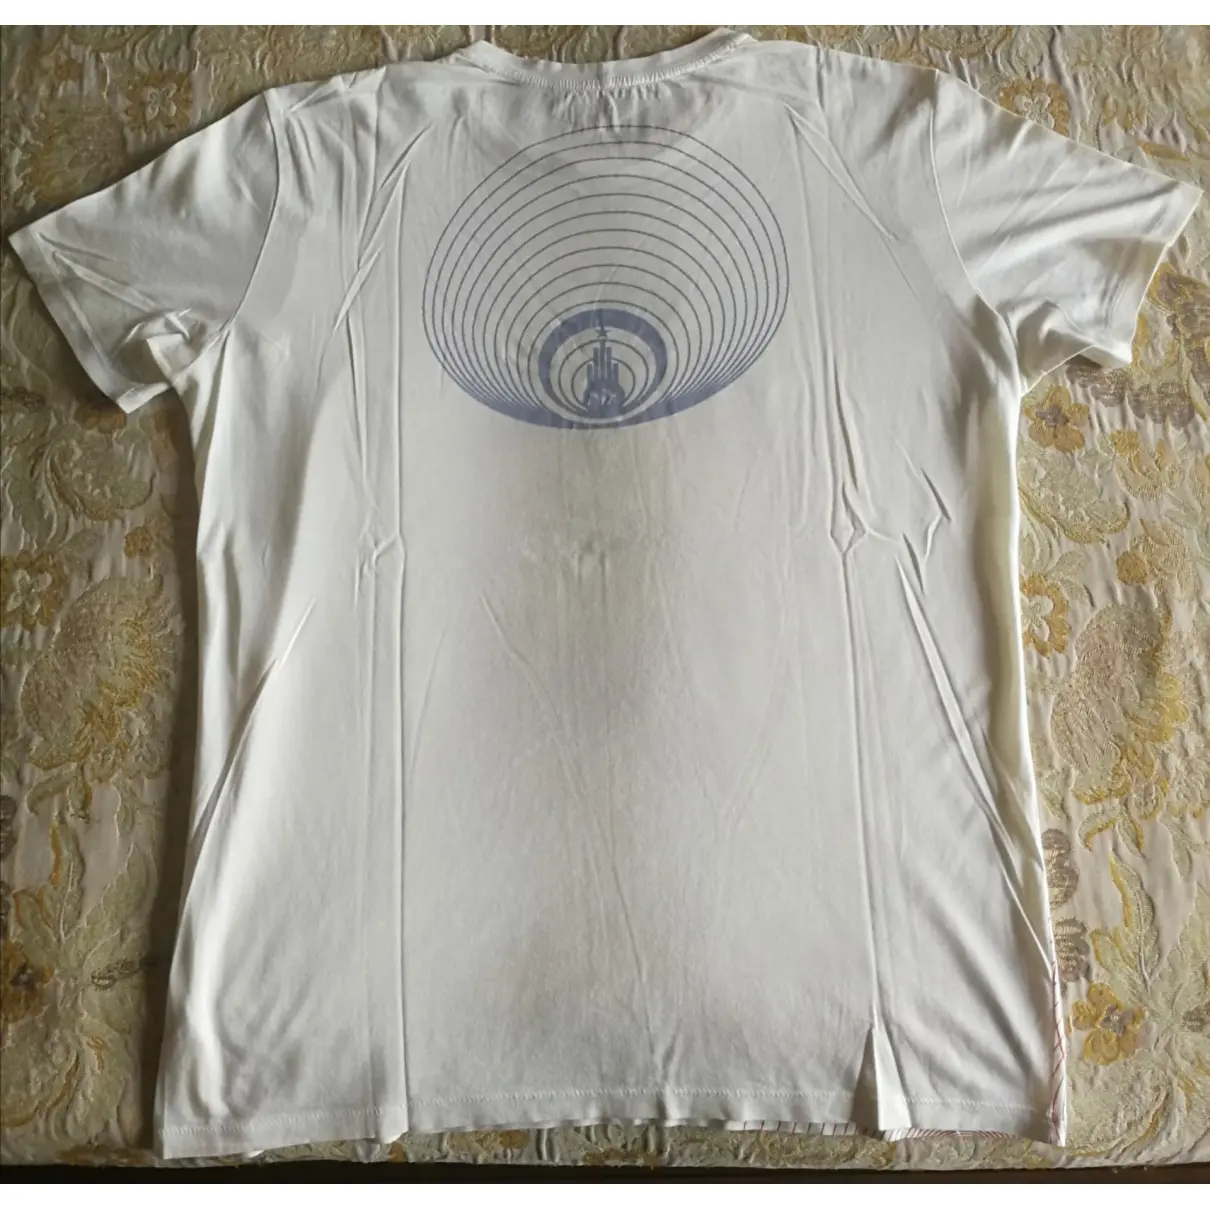 Buy Armani Exchange T-shirt online